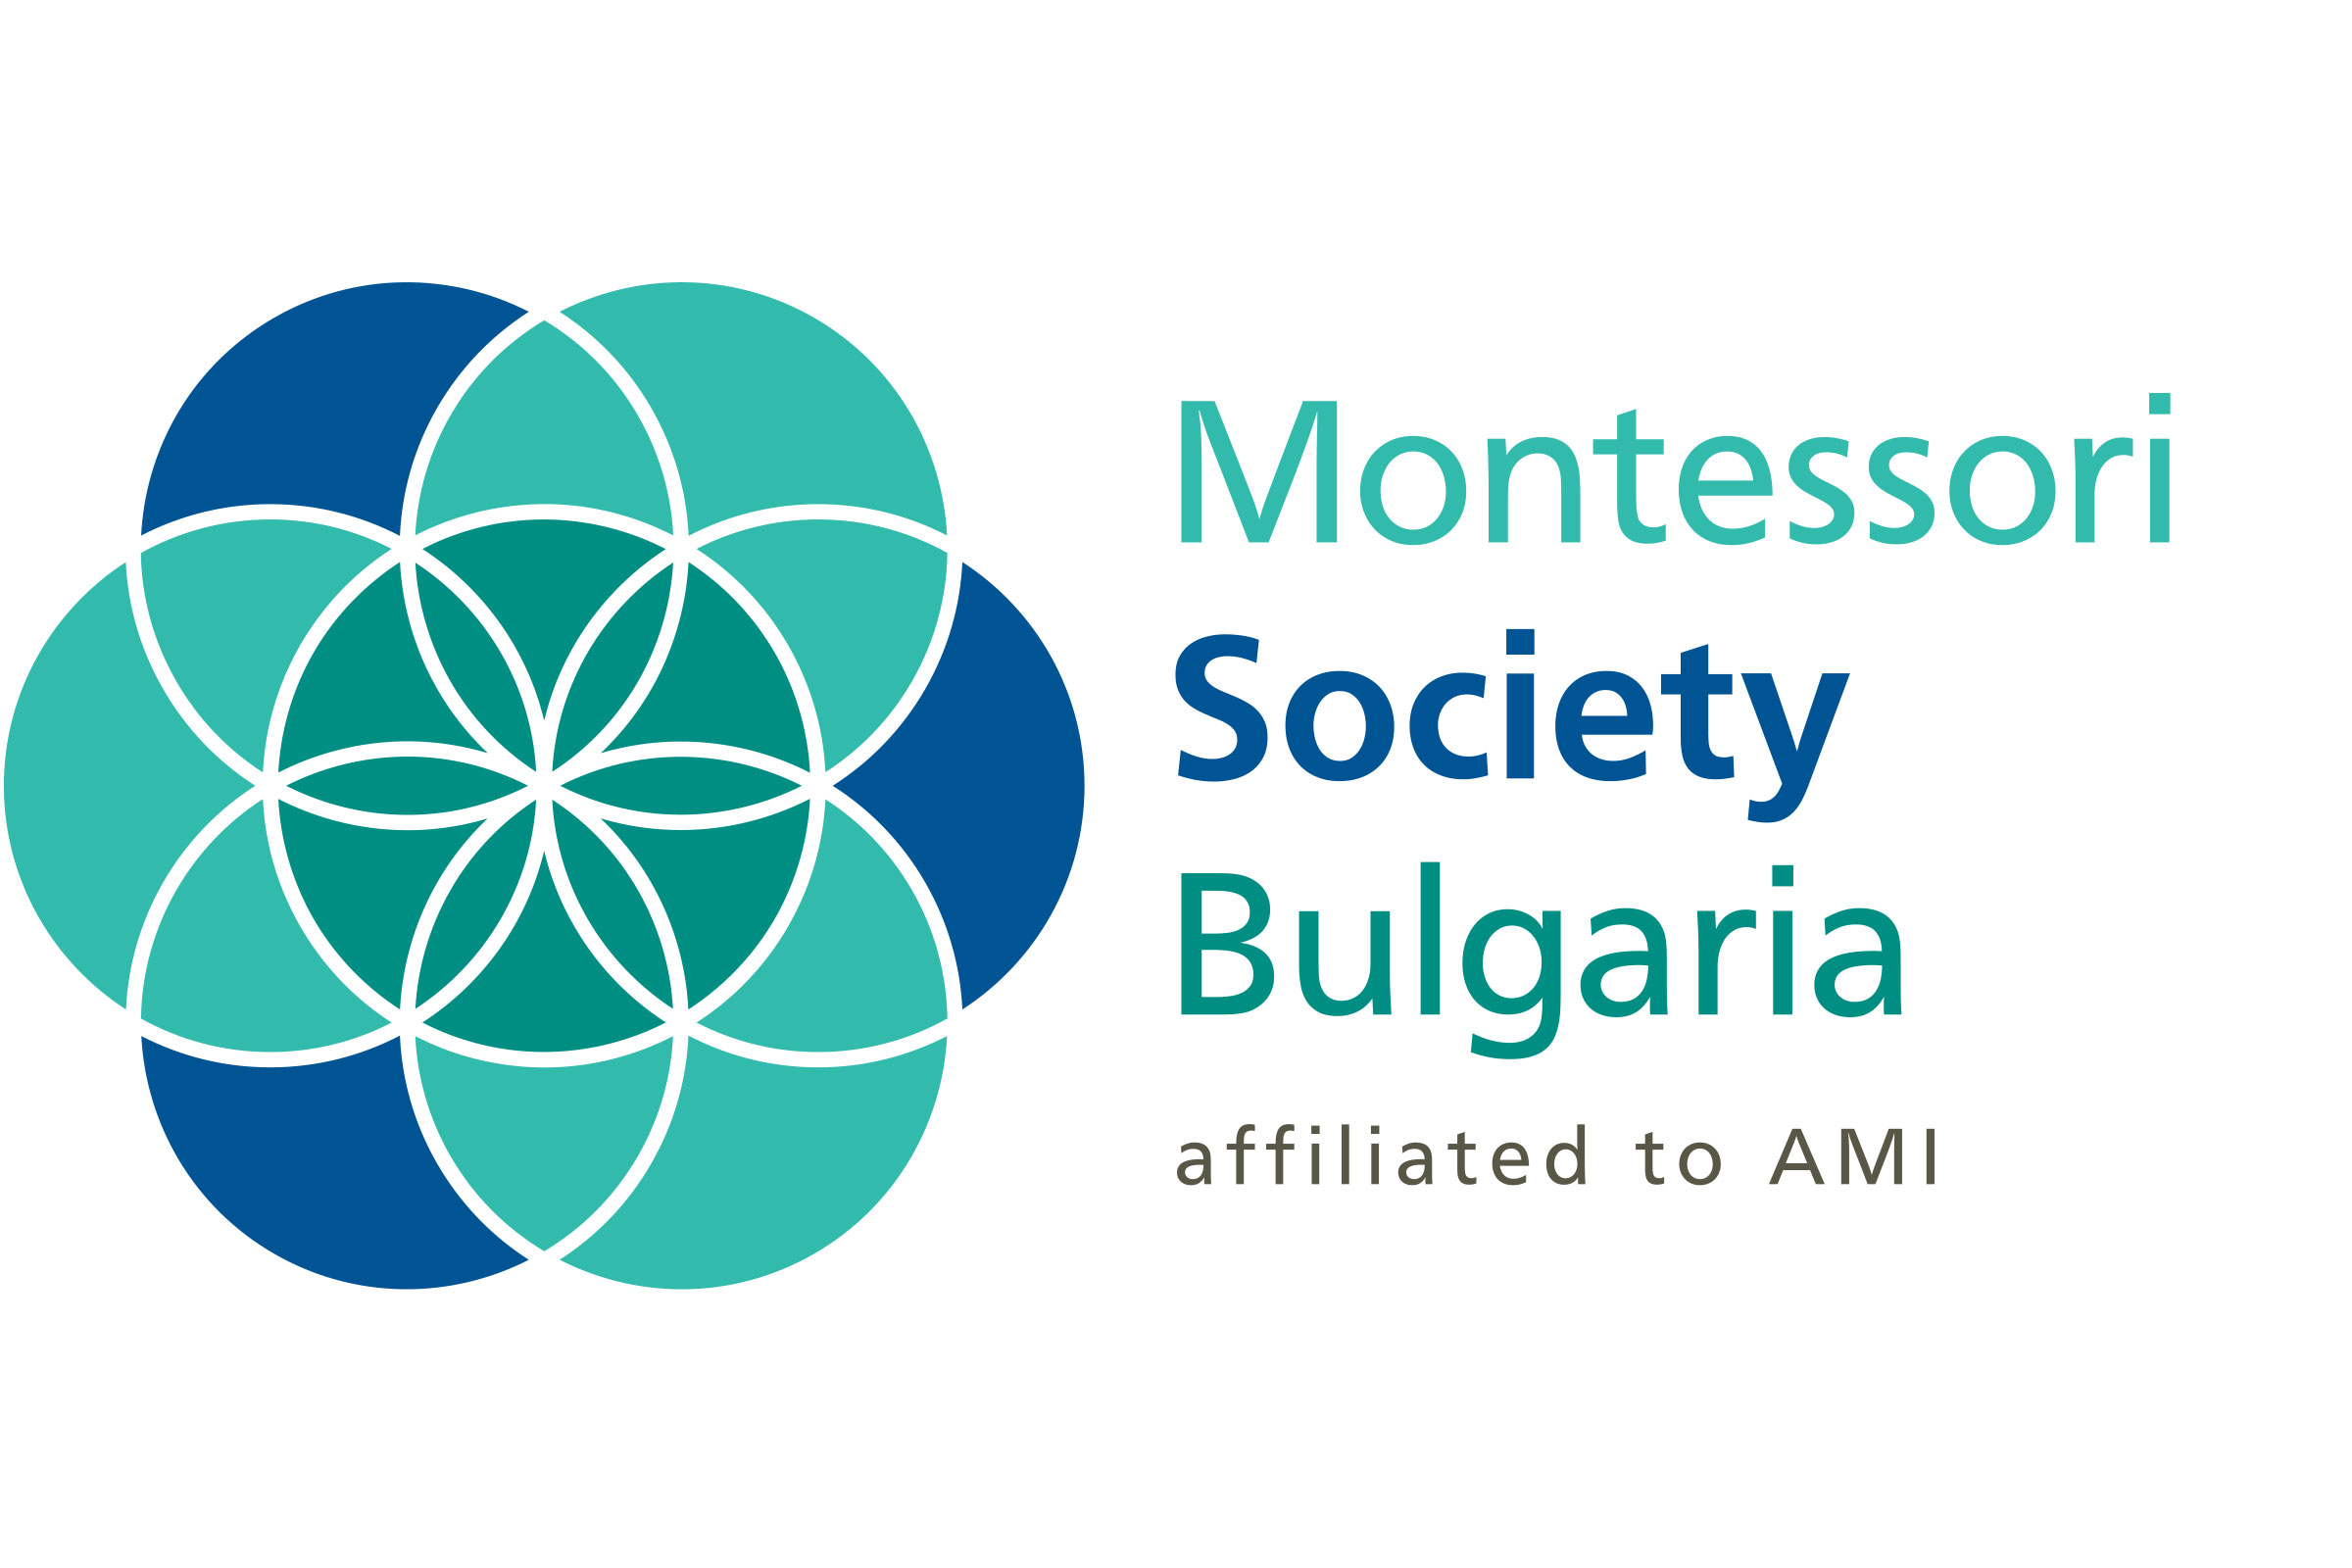 Montessori Society Bulgaria logo